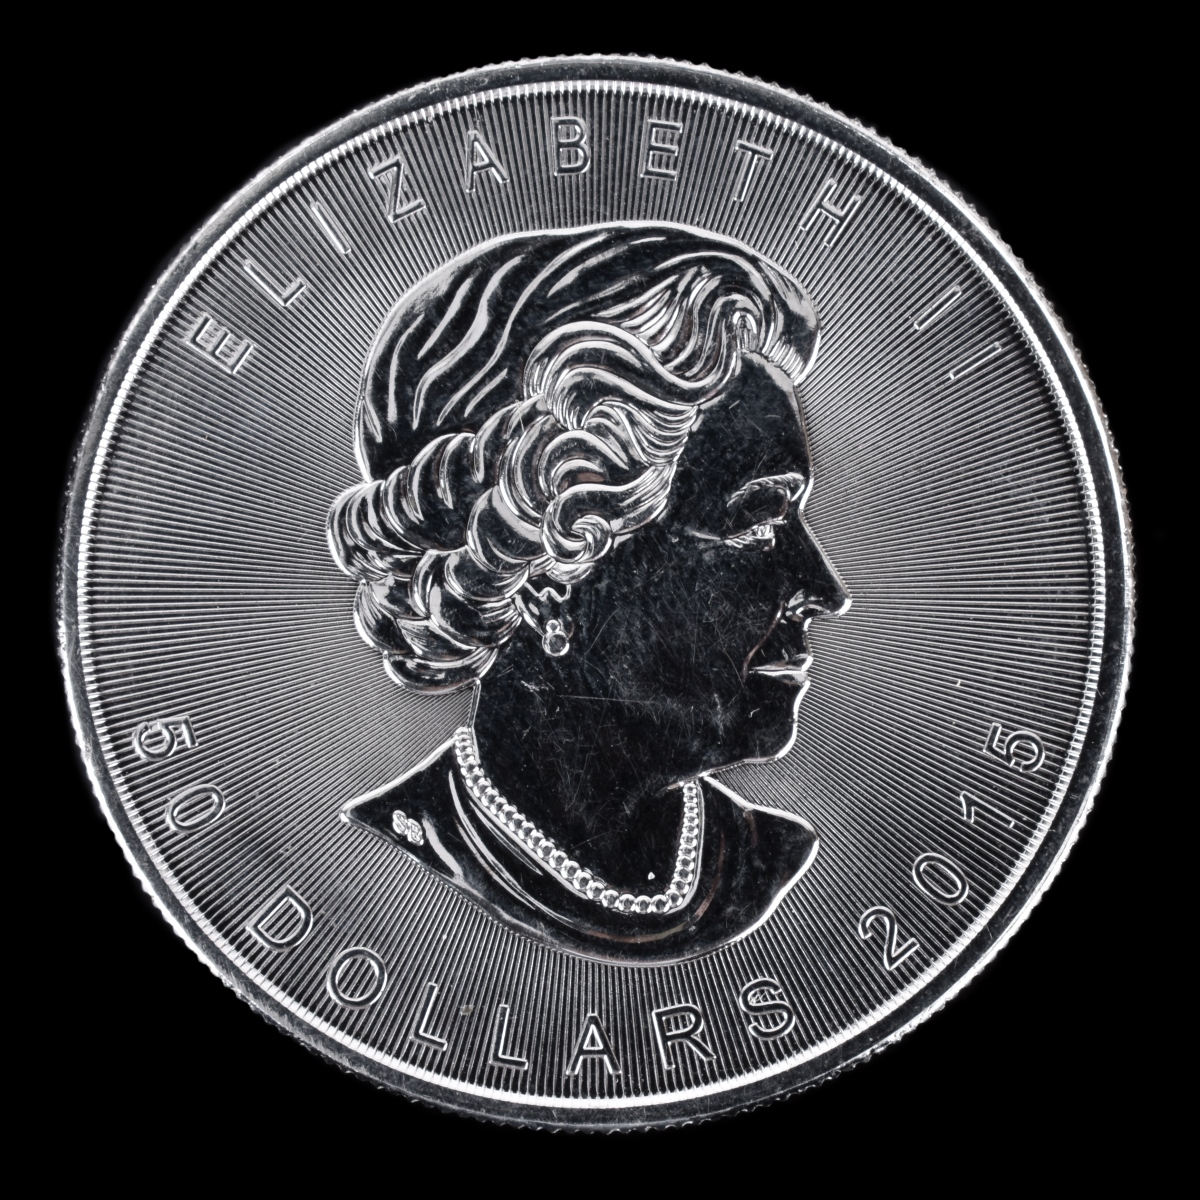 1 oz Palladium Canada Maple Leaf Coin